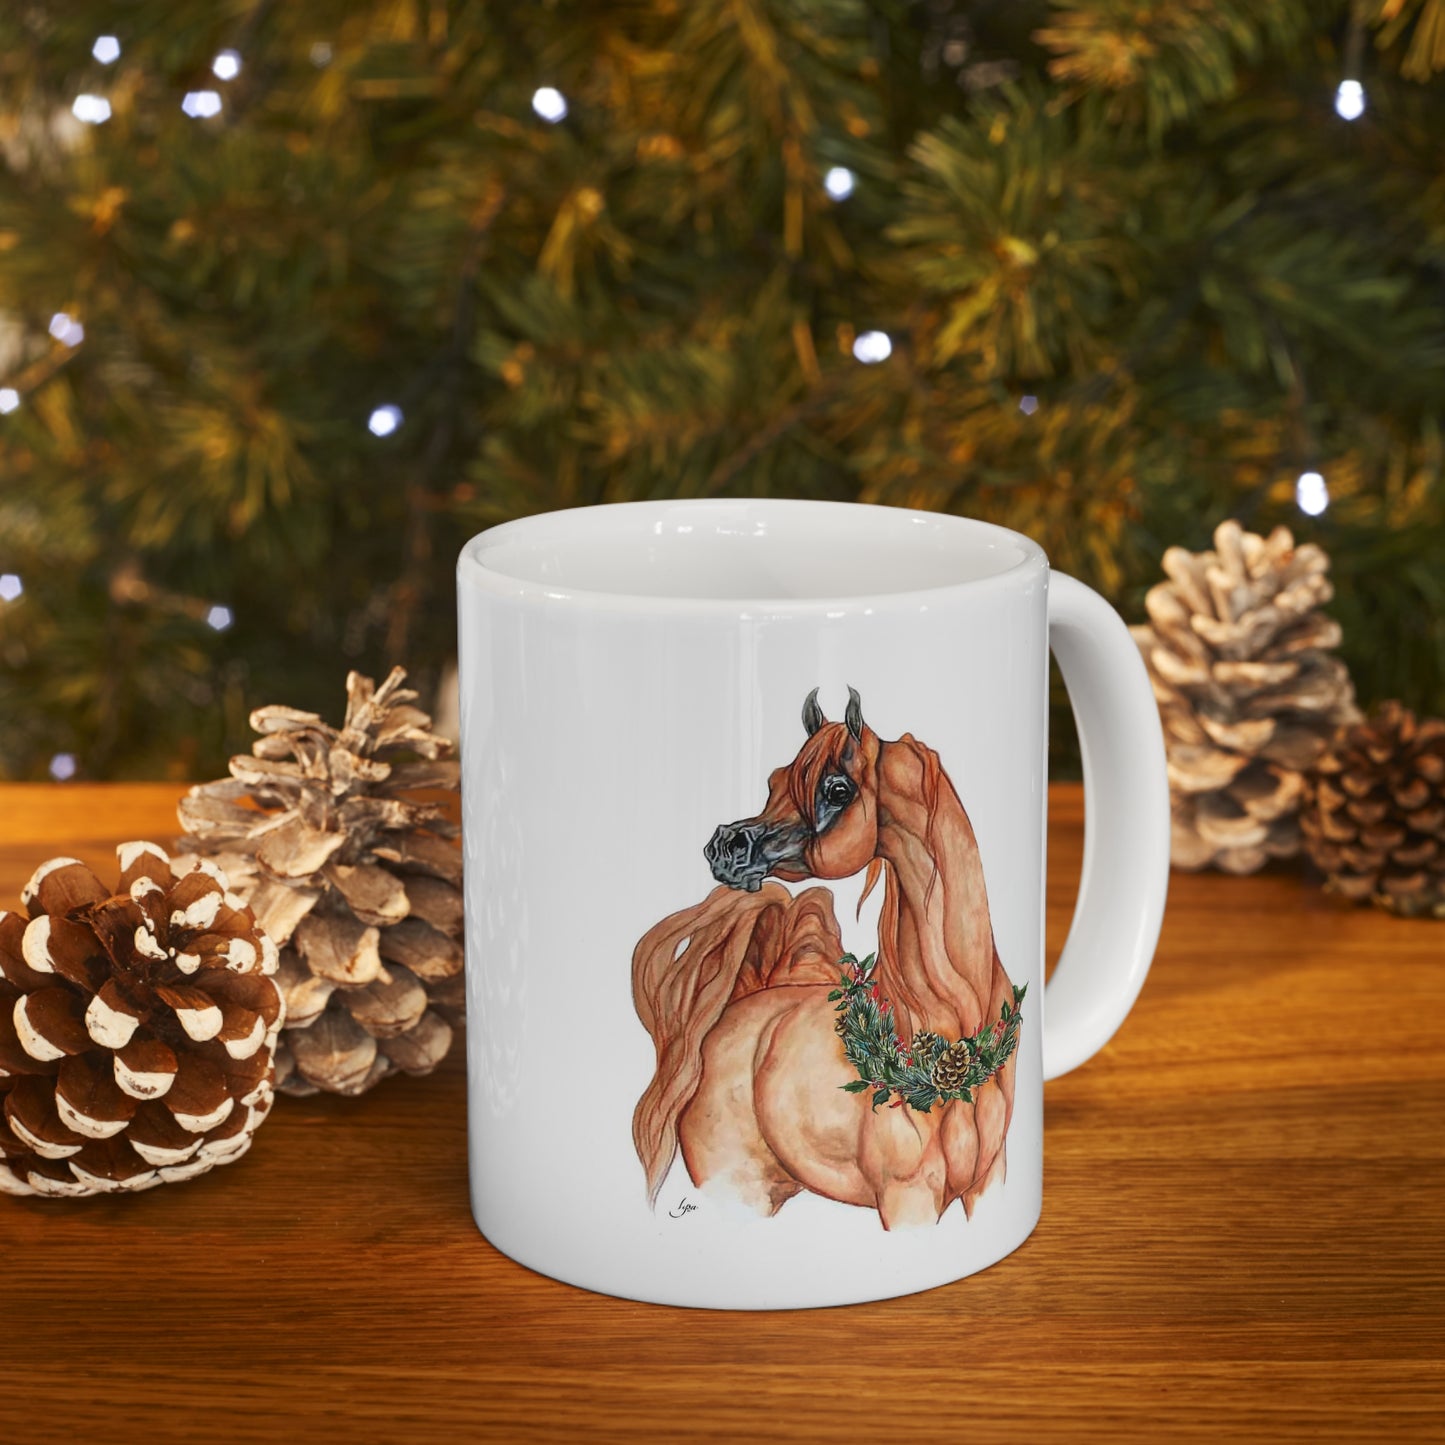 Limited Edition Arabian Horse World Holiday Mug